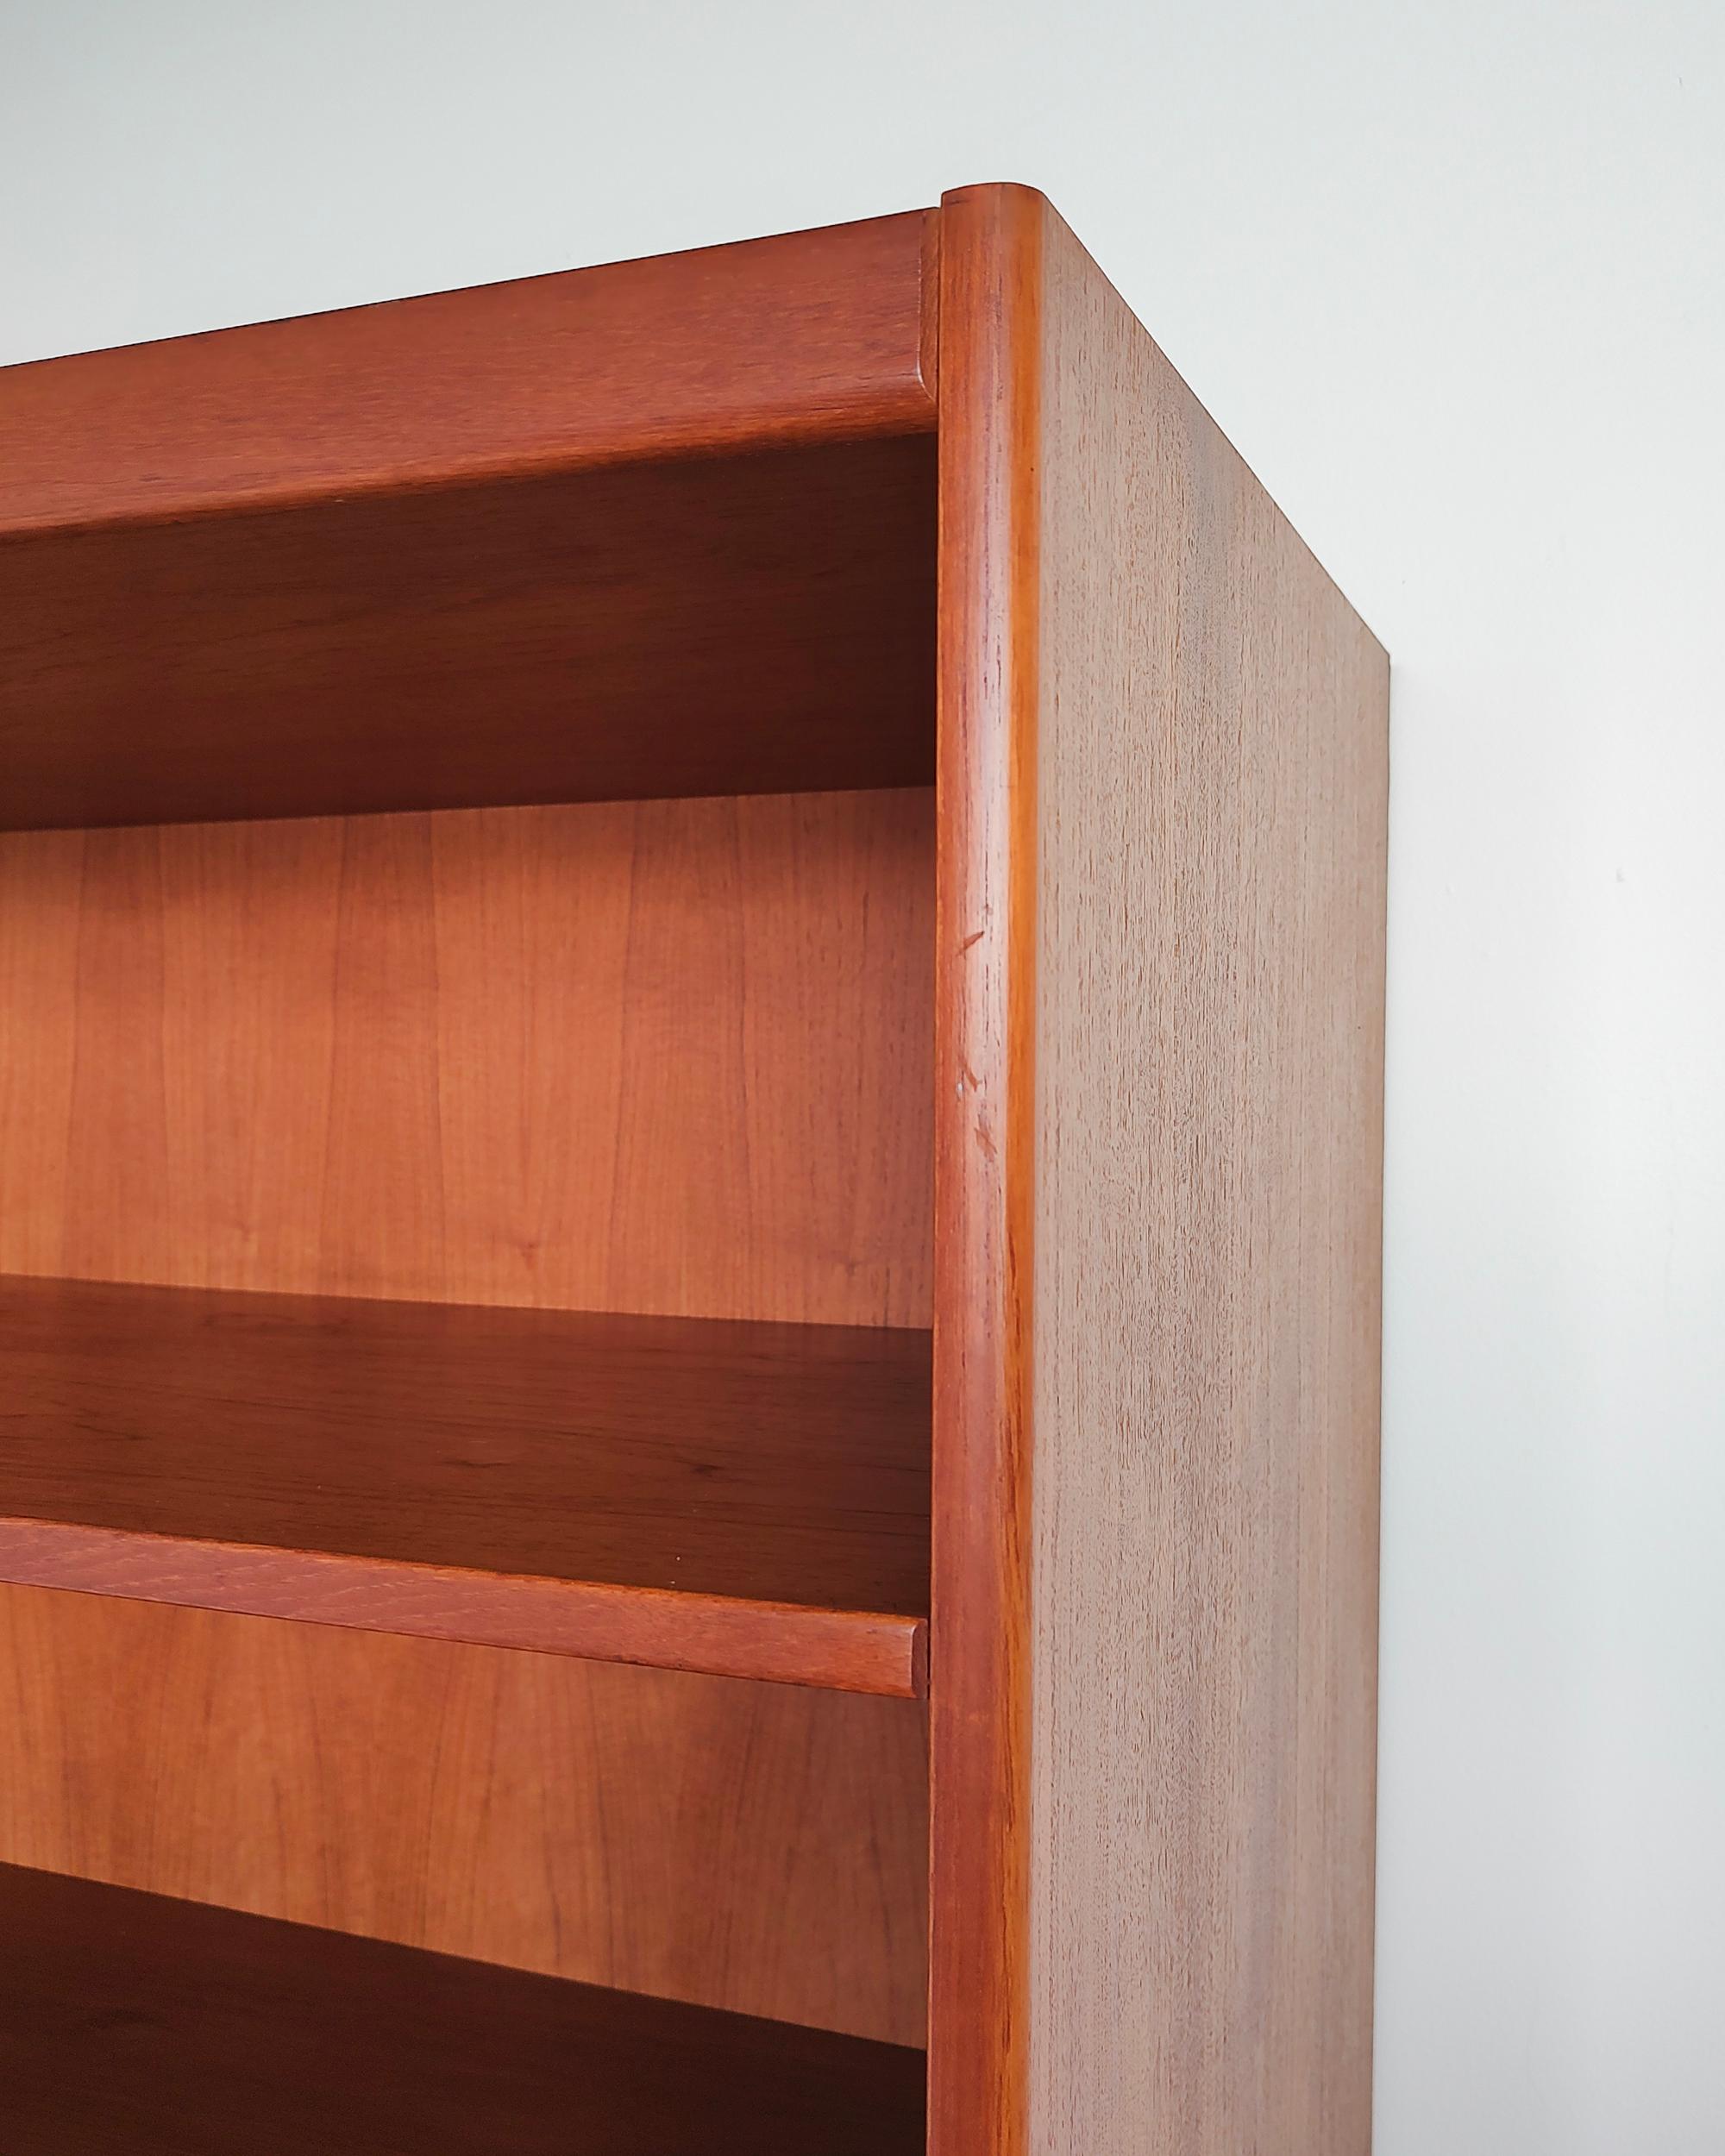 Danish Mid-Century Modern Teak Wood Tall Shelf Bookshelf Bookcase For Sale 2